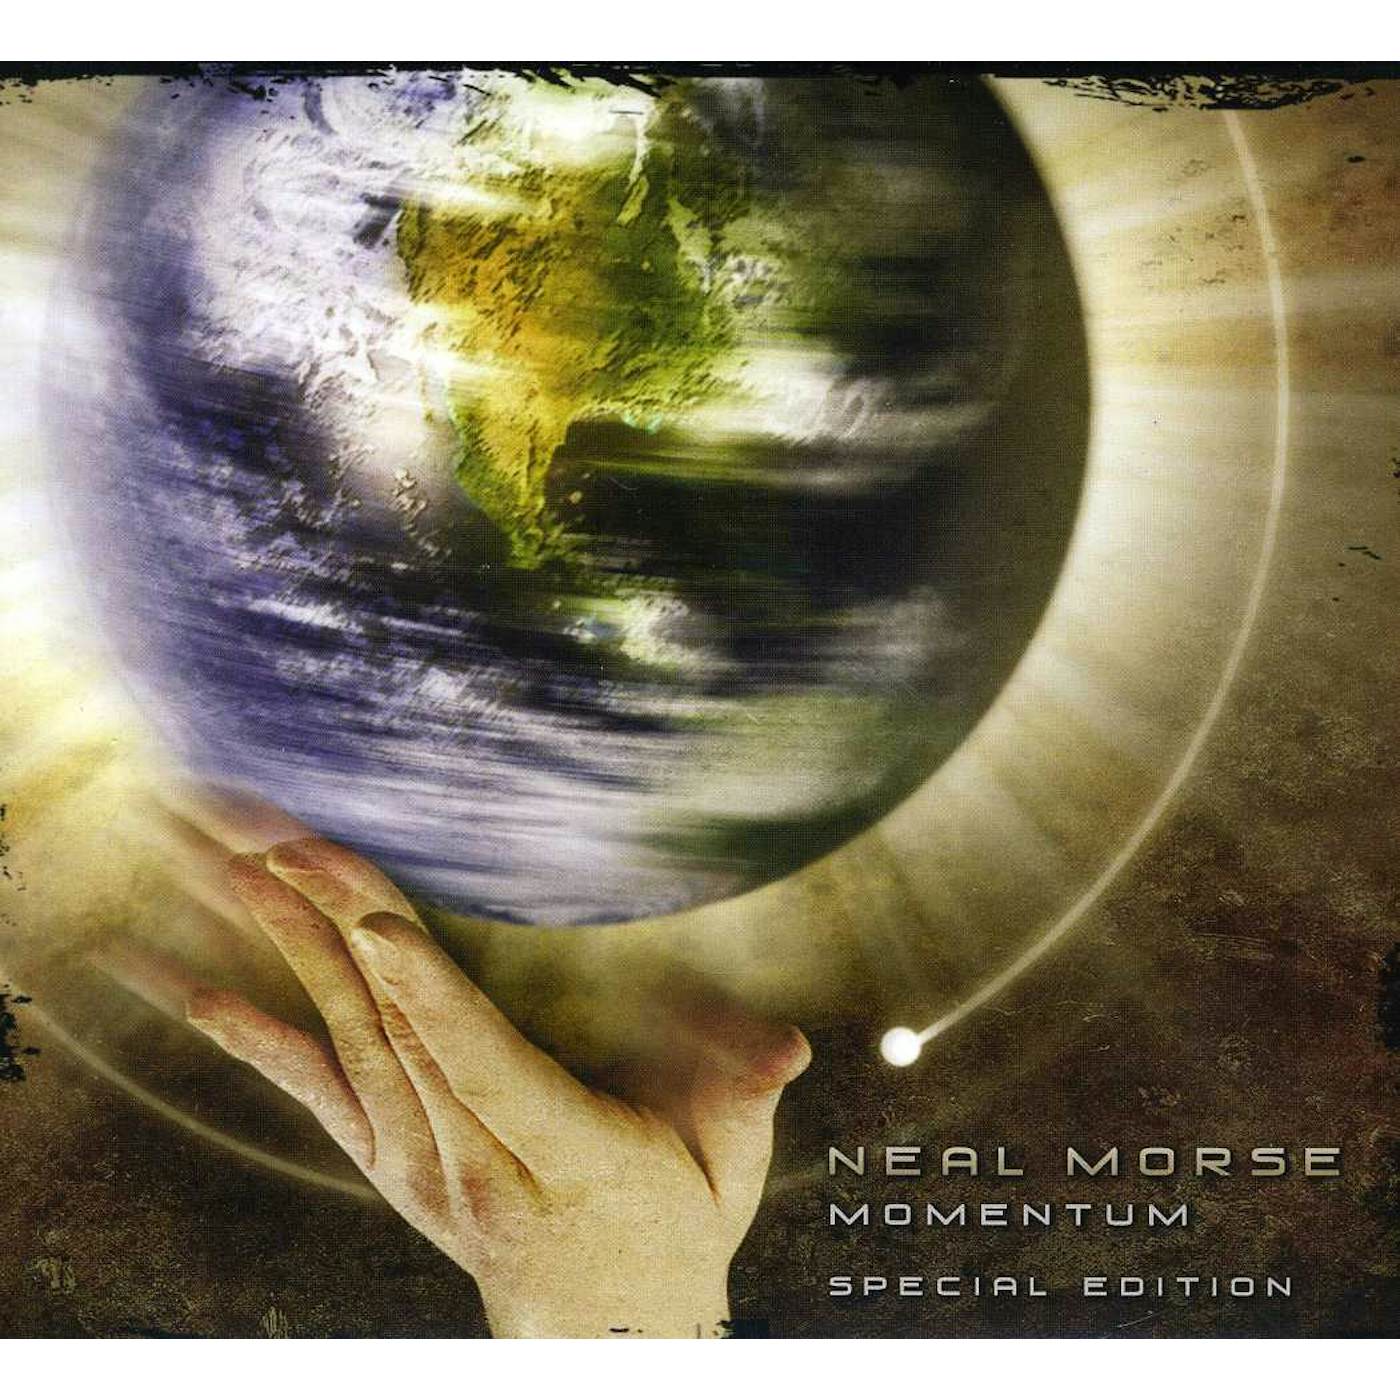 Neal Morse MOMENTUM CD